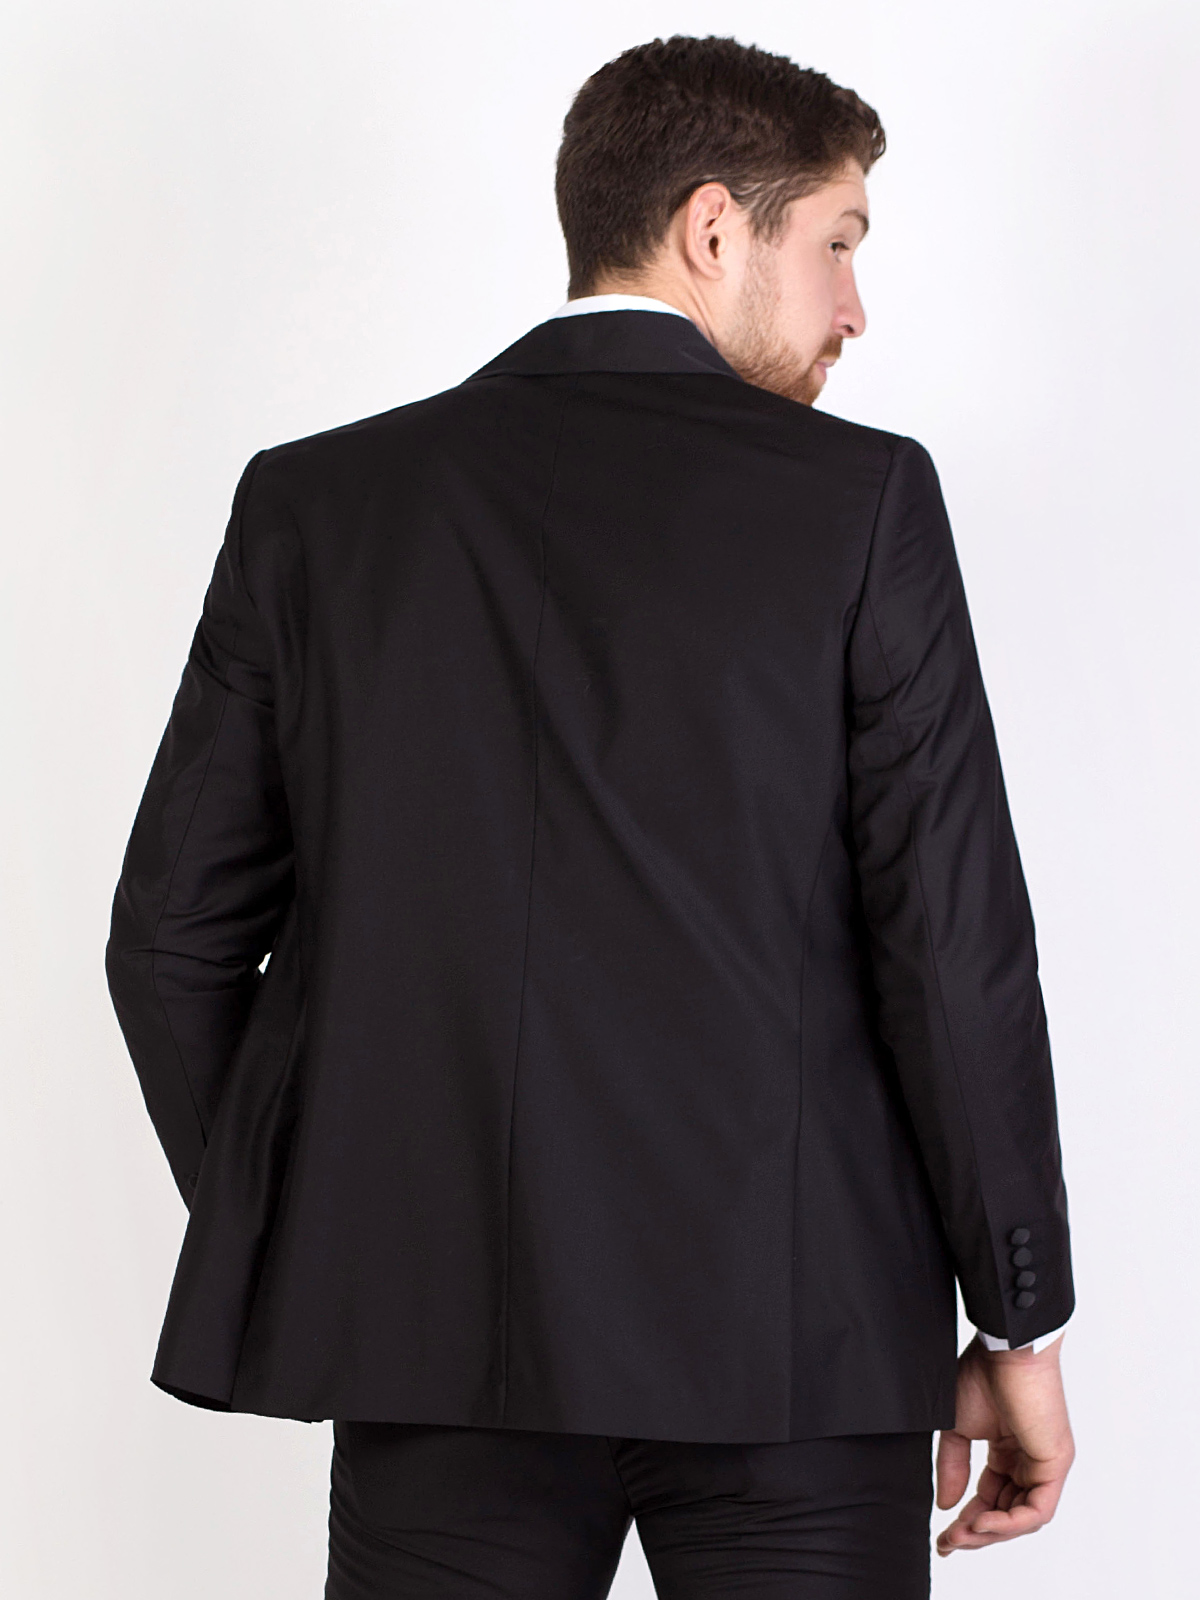 Black elegant jacket with satin collar - 64109 € 111.92 img4